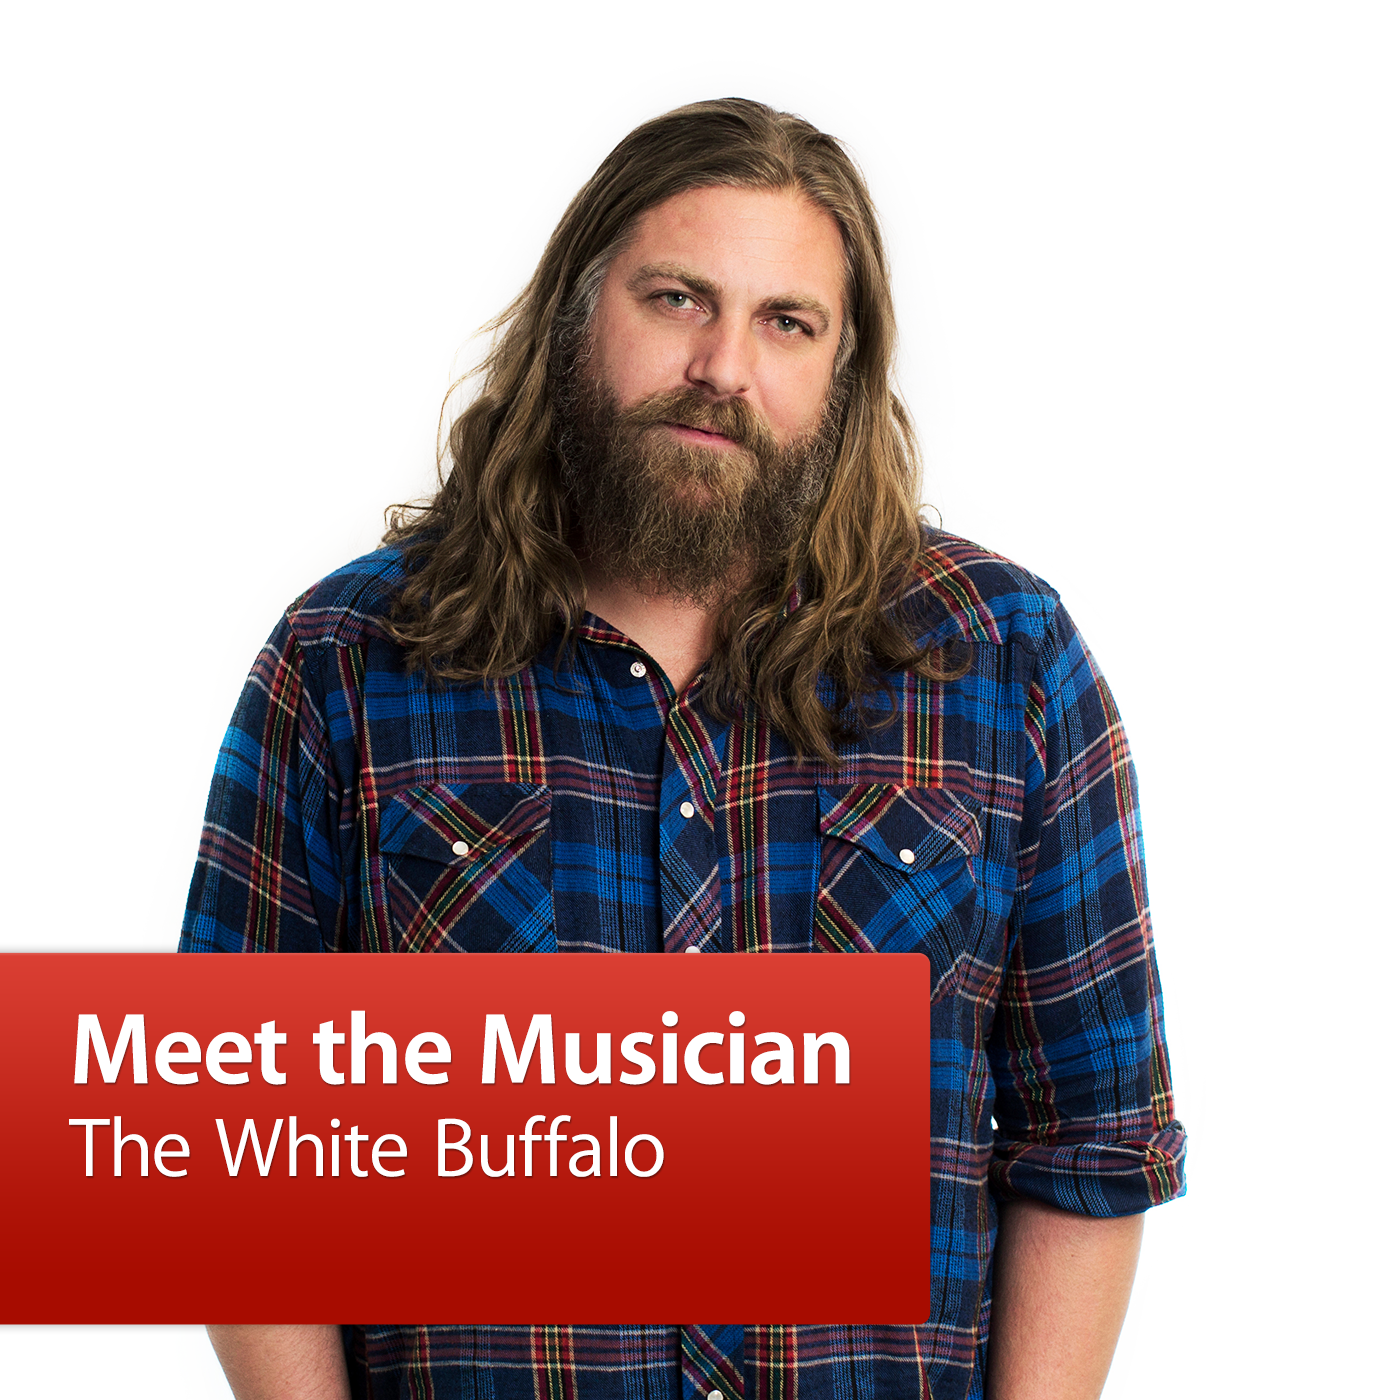 The White Buffalo: Meet the Musician